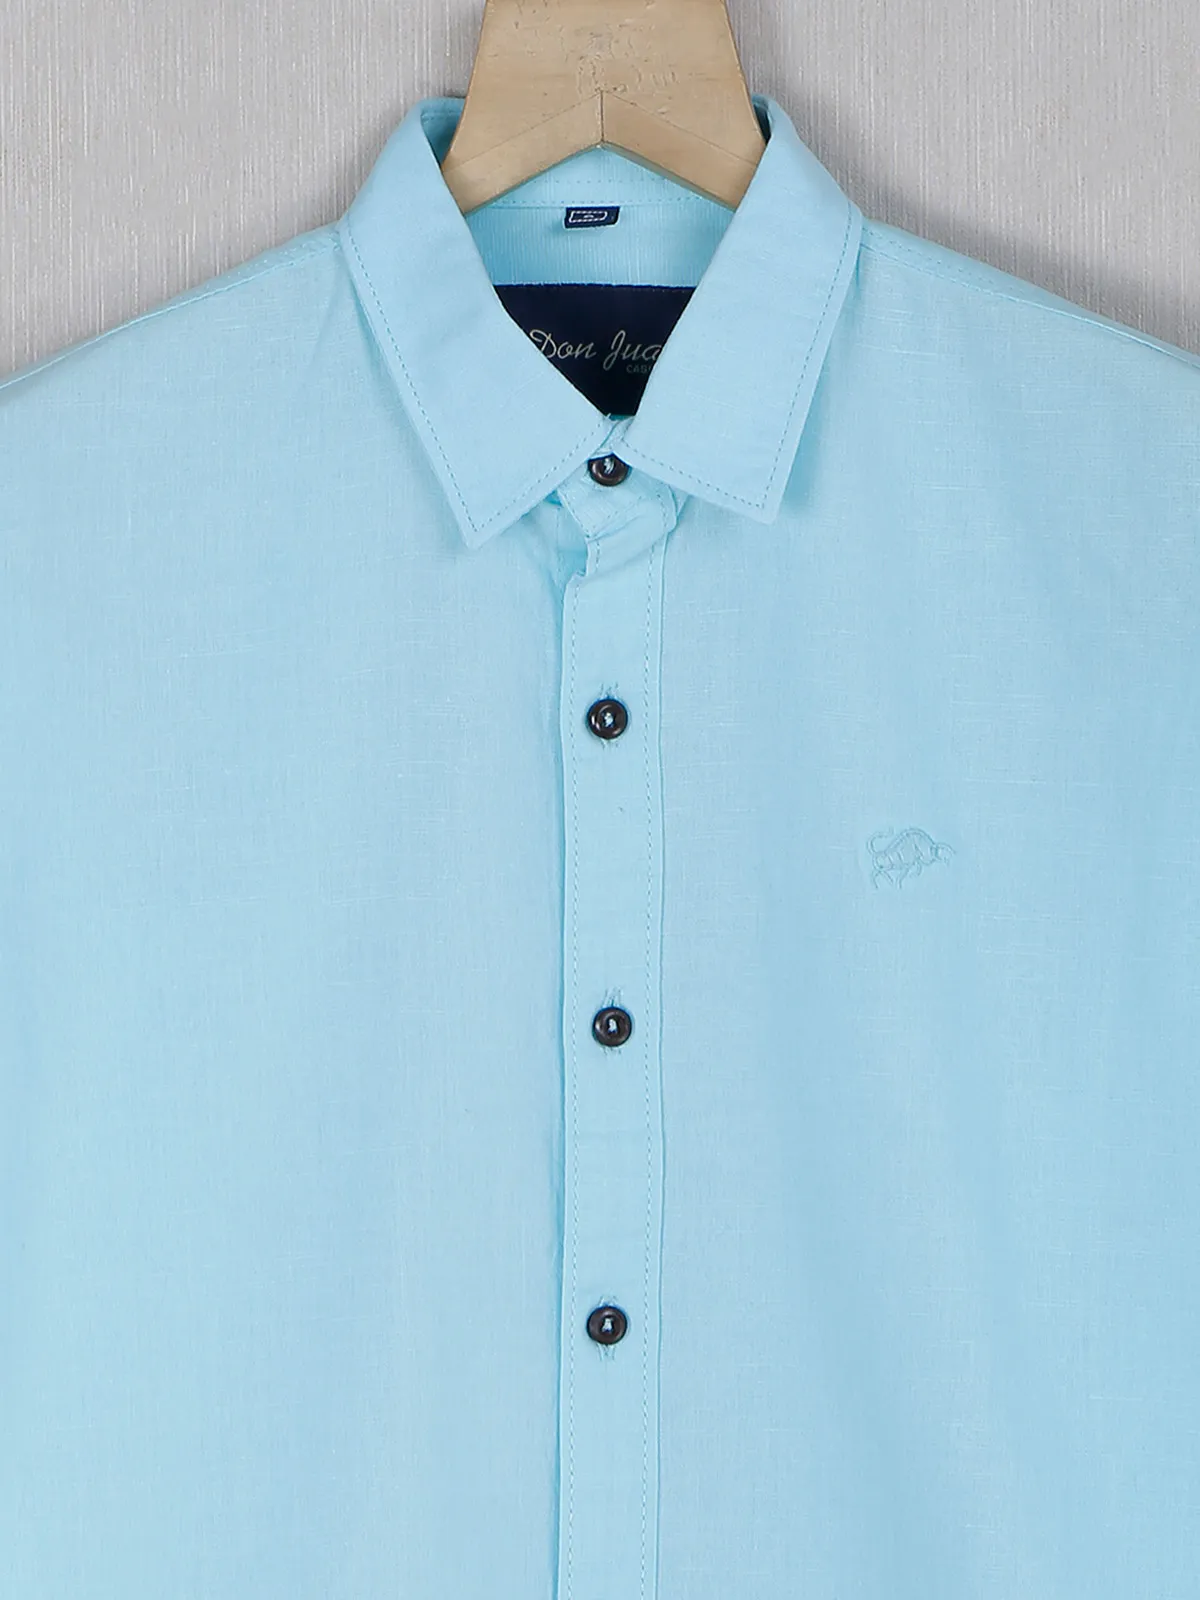 DNJS sea blue plain style shirt for boys